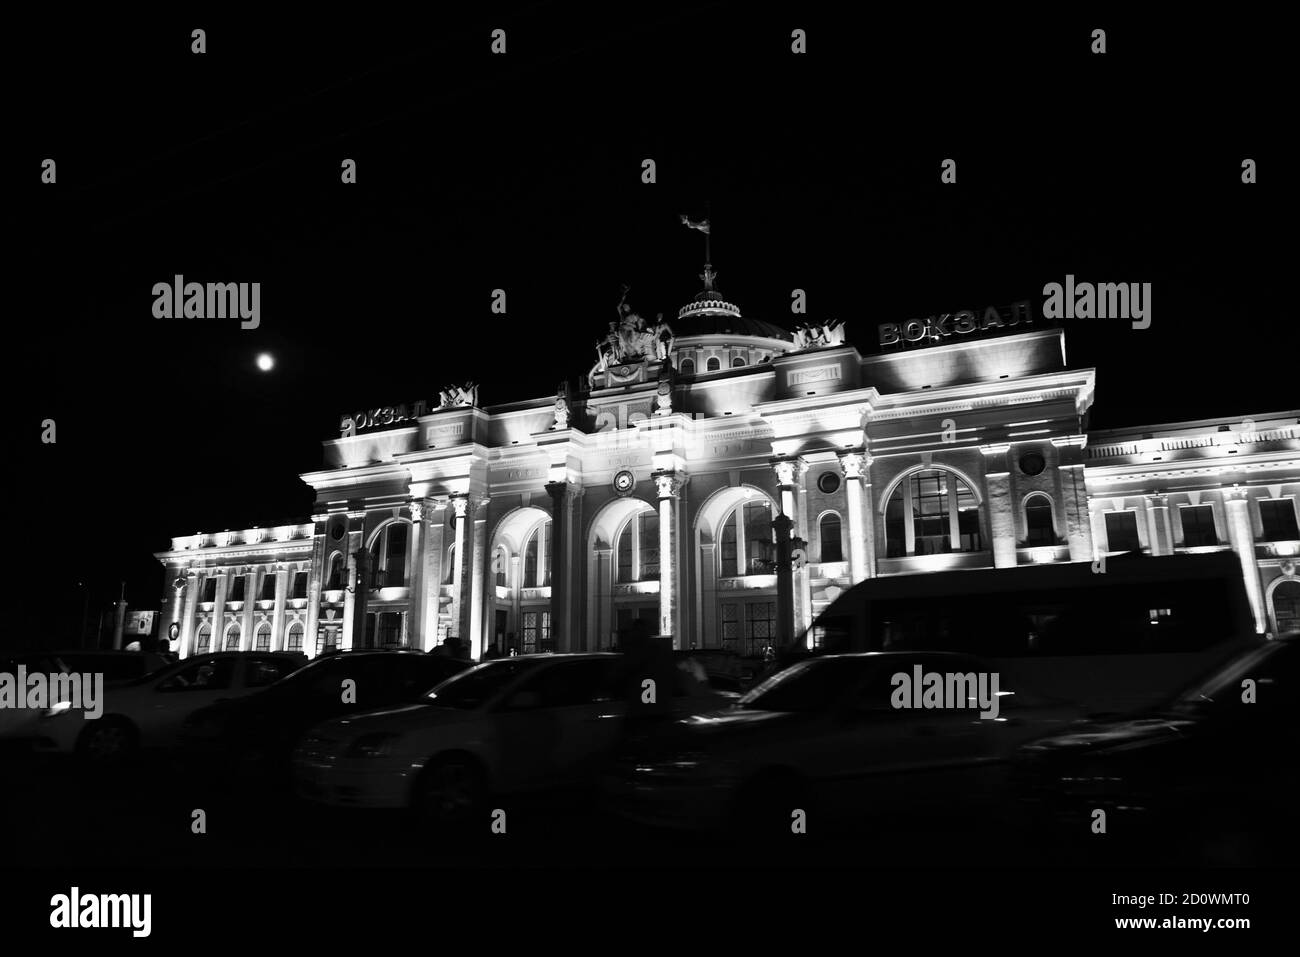 ODESSA / UKRAINE - SEPTEMBER 22, 2018: Main train station of Odessa at night, front view Stock Photo